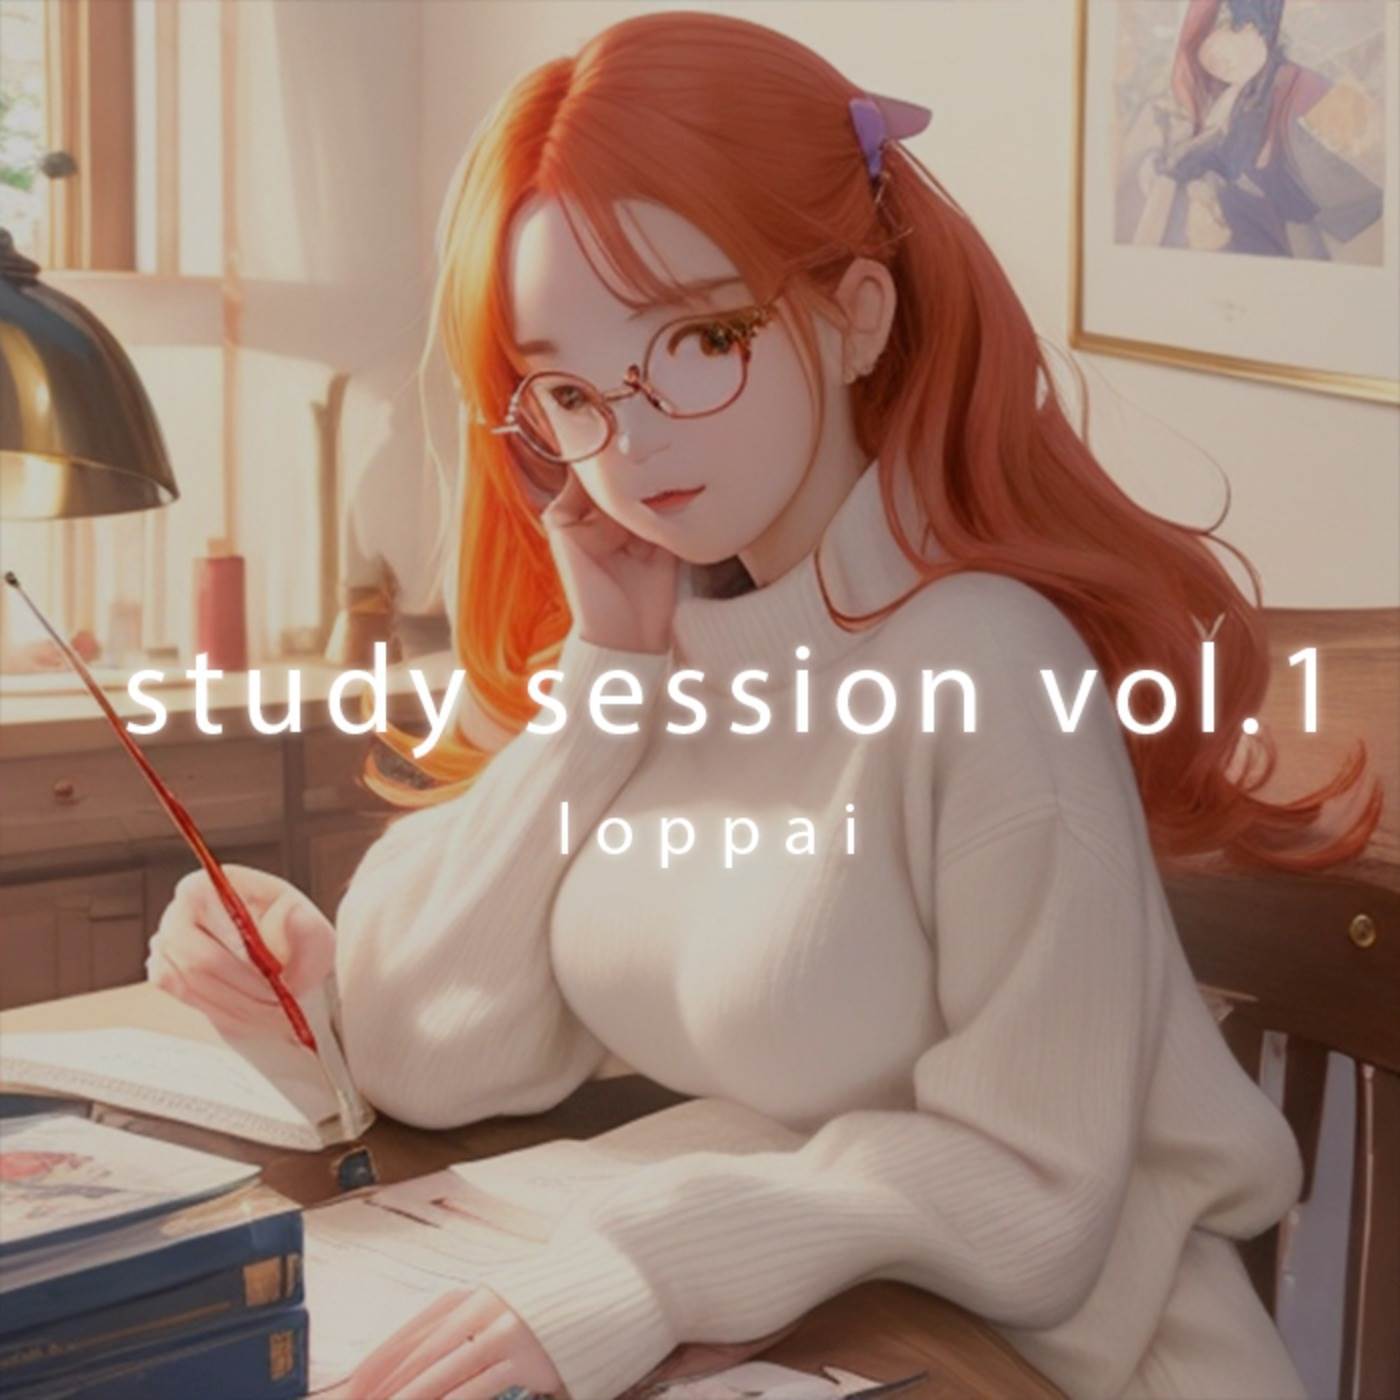 Loppai - the hardest exam